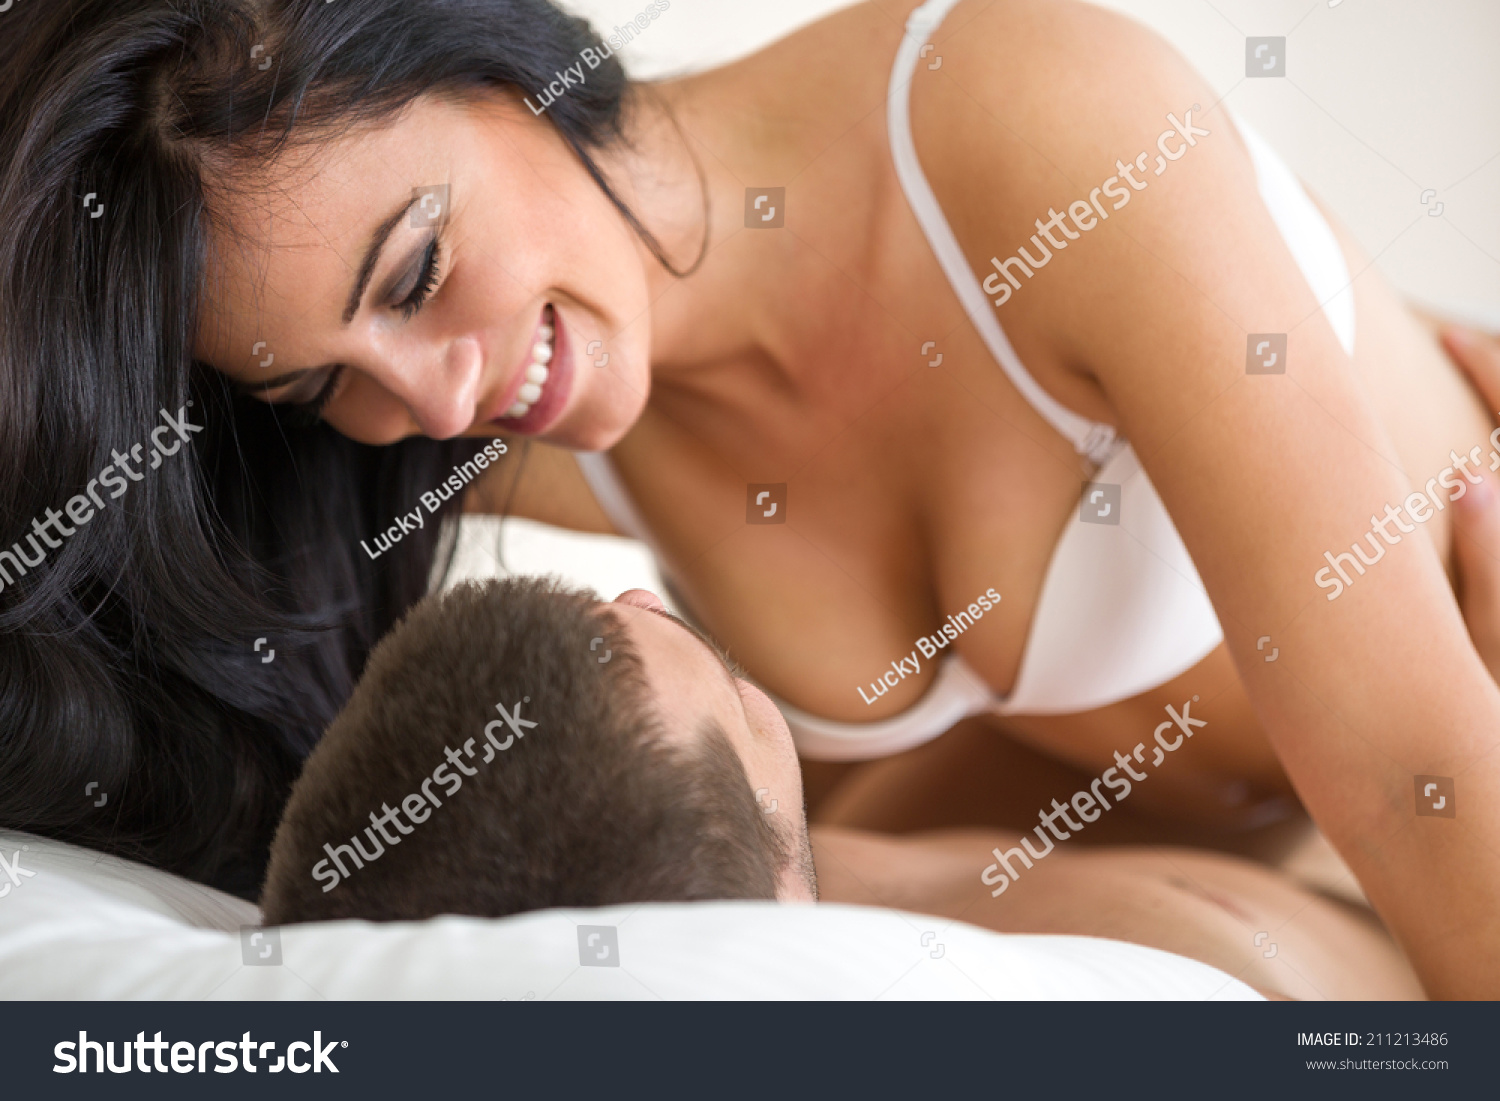 Sex Porn In Bed 64